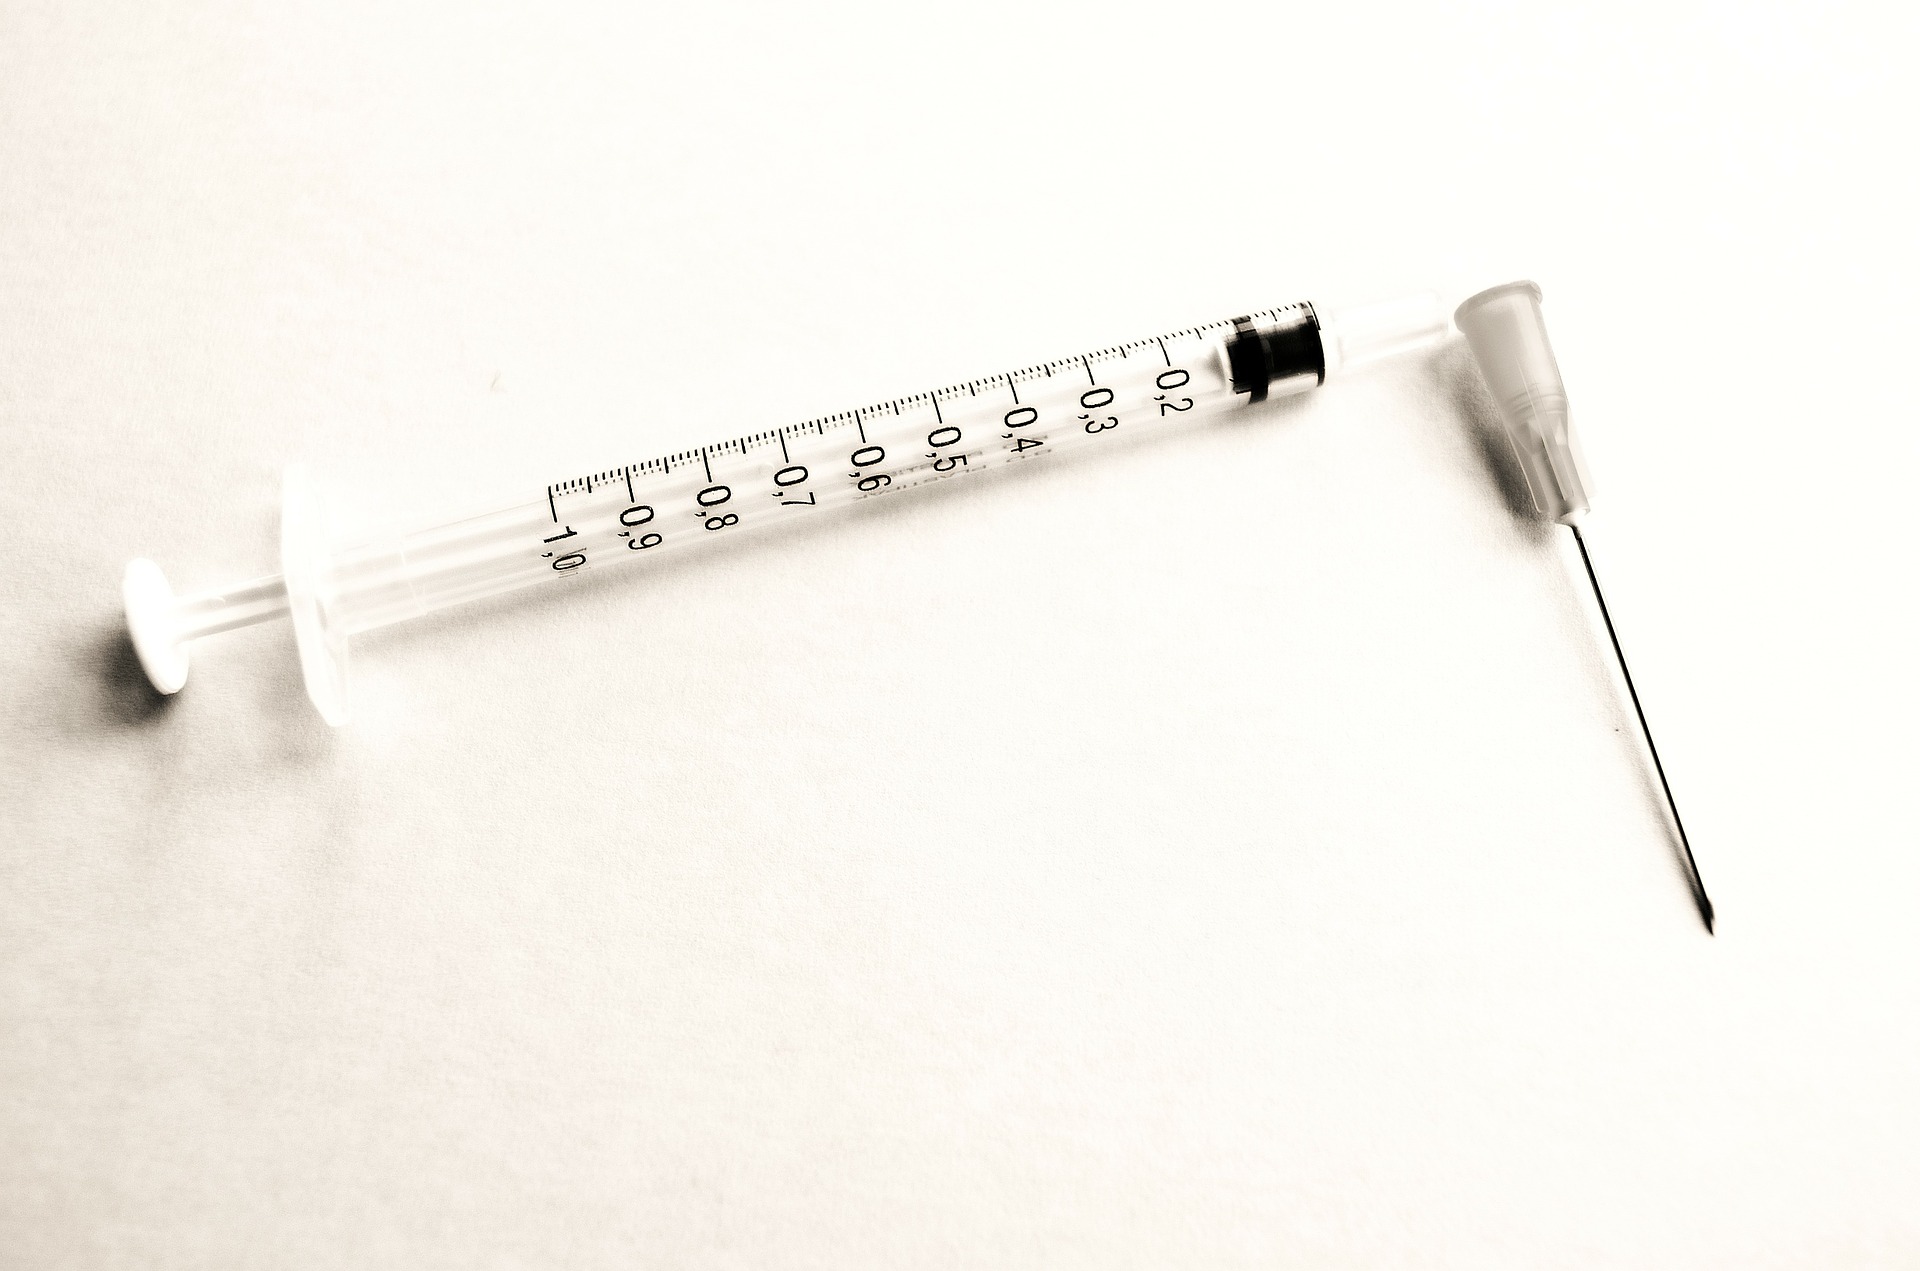 Japan banned MMR vaccine, stops recommending Gardasil